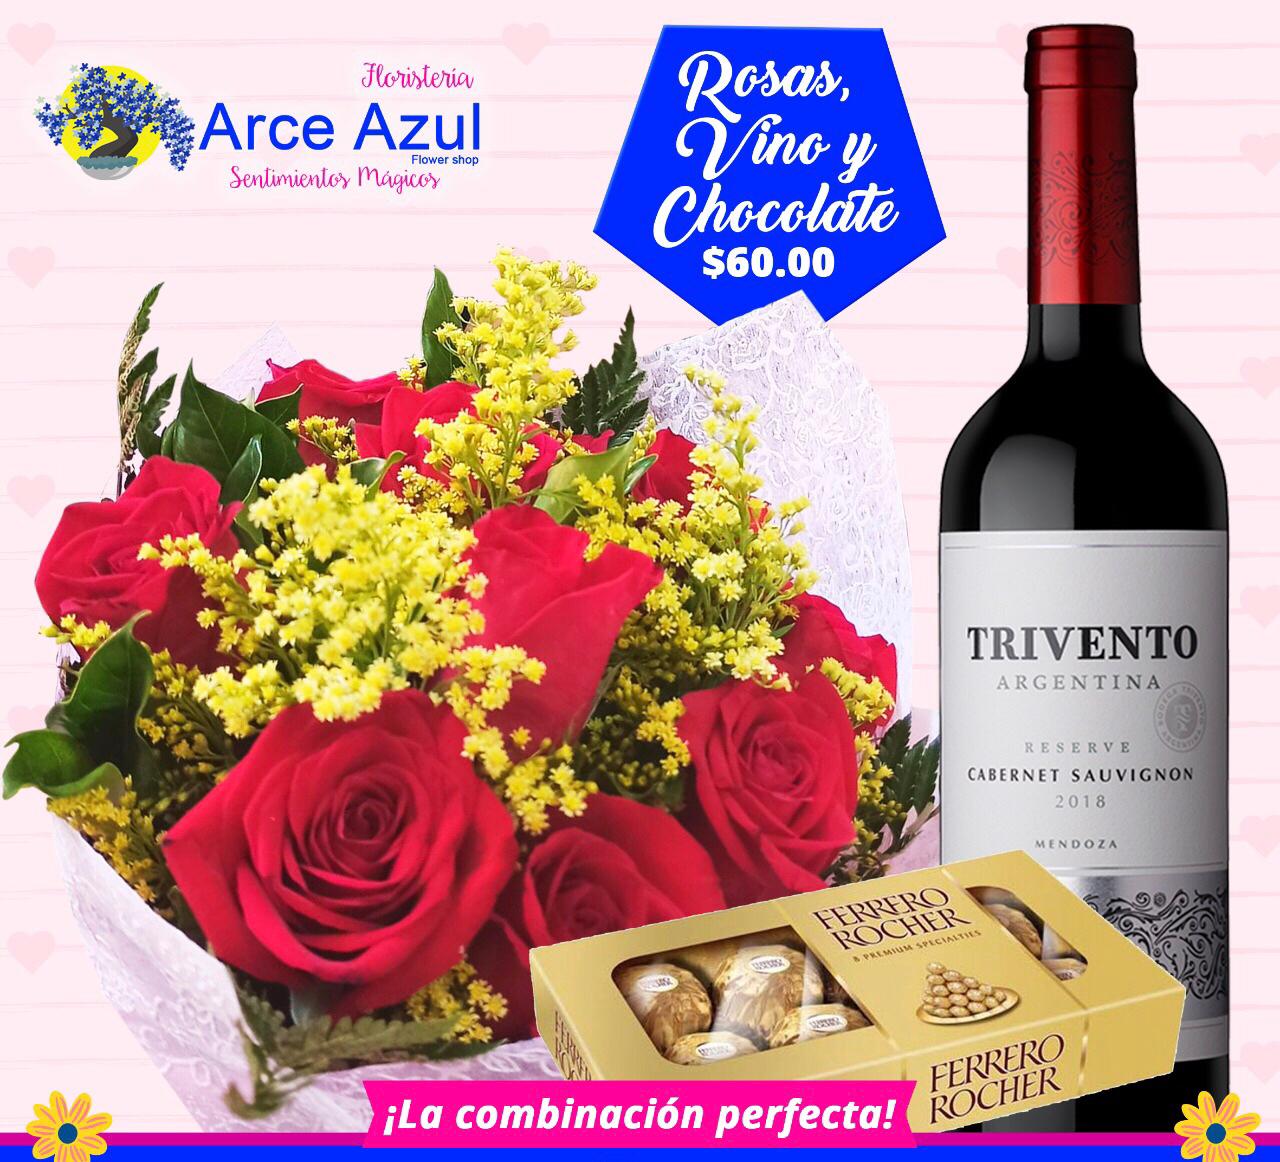 RA-010 Ramo de rosas rojas, chocolate y vino Trivento-Cabernet Sauvignon –  Arce Azul Flower Shop